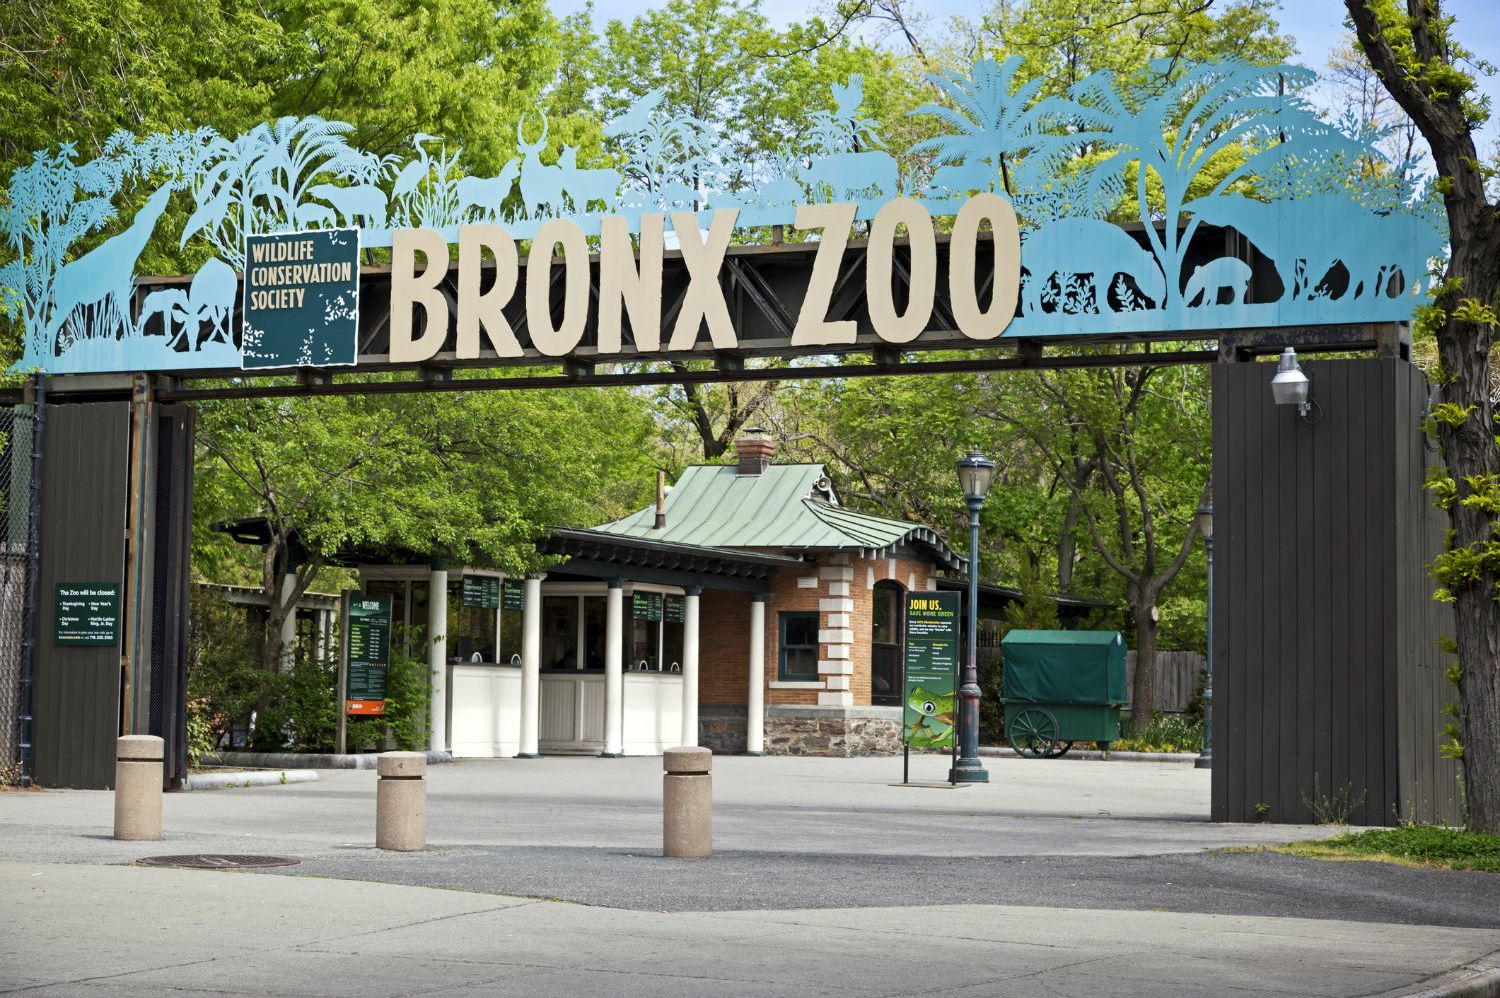 bronx zoo s:3 e:5